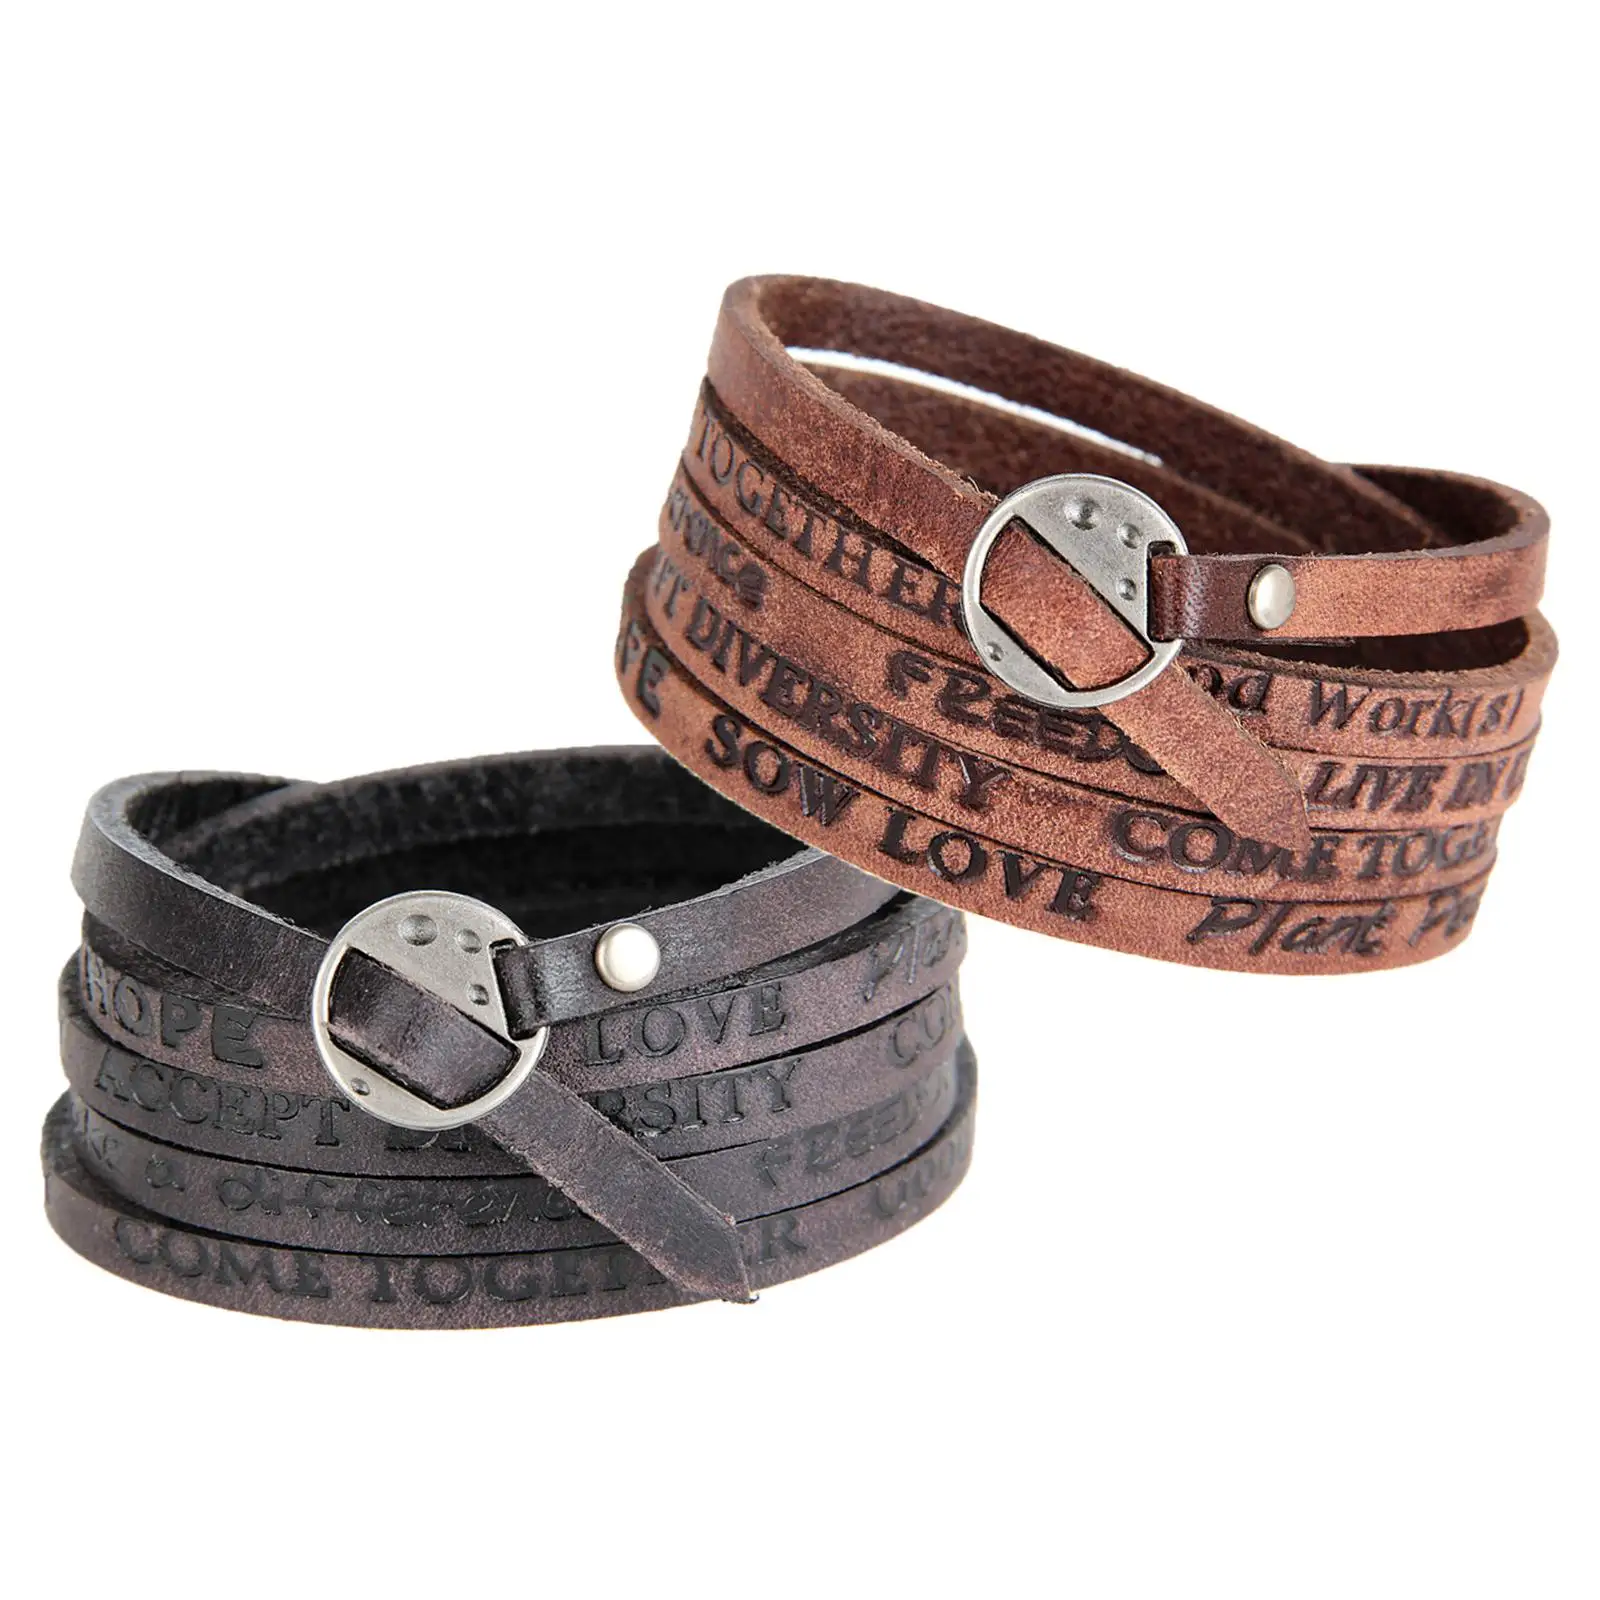 PU Leather Wide Bracelet Punk Jewelry Gifts Fashion Vintage Adjustable Wristband for Friendship Boys Husband Friend Unisex